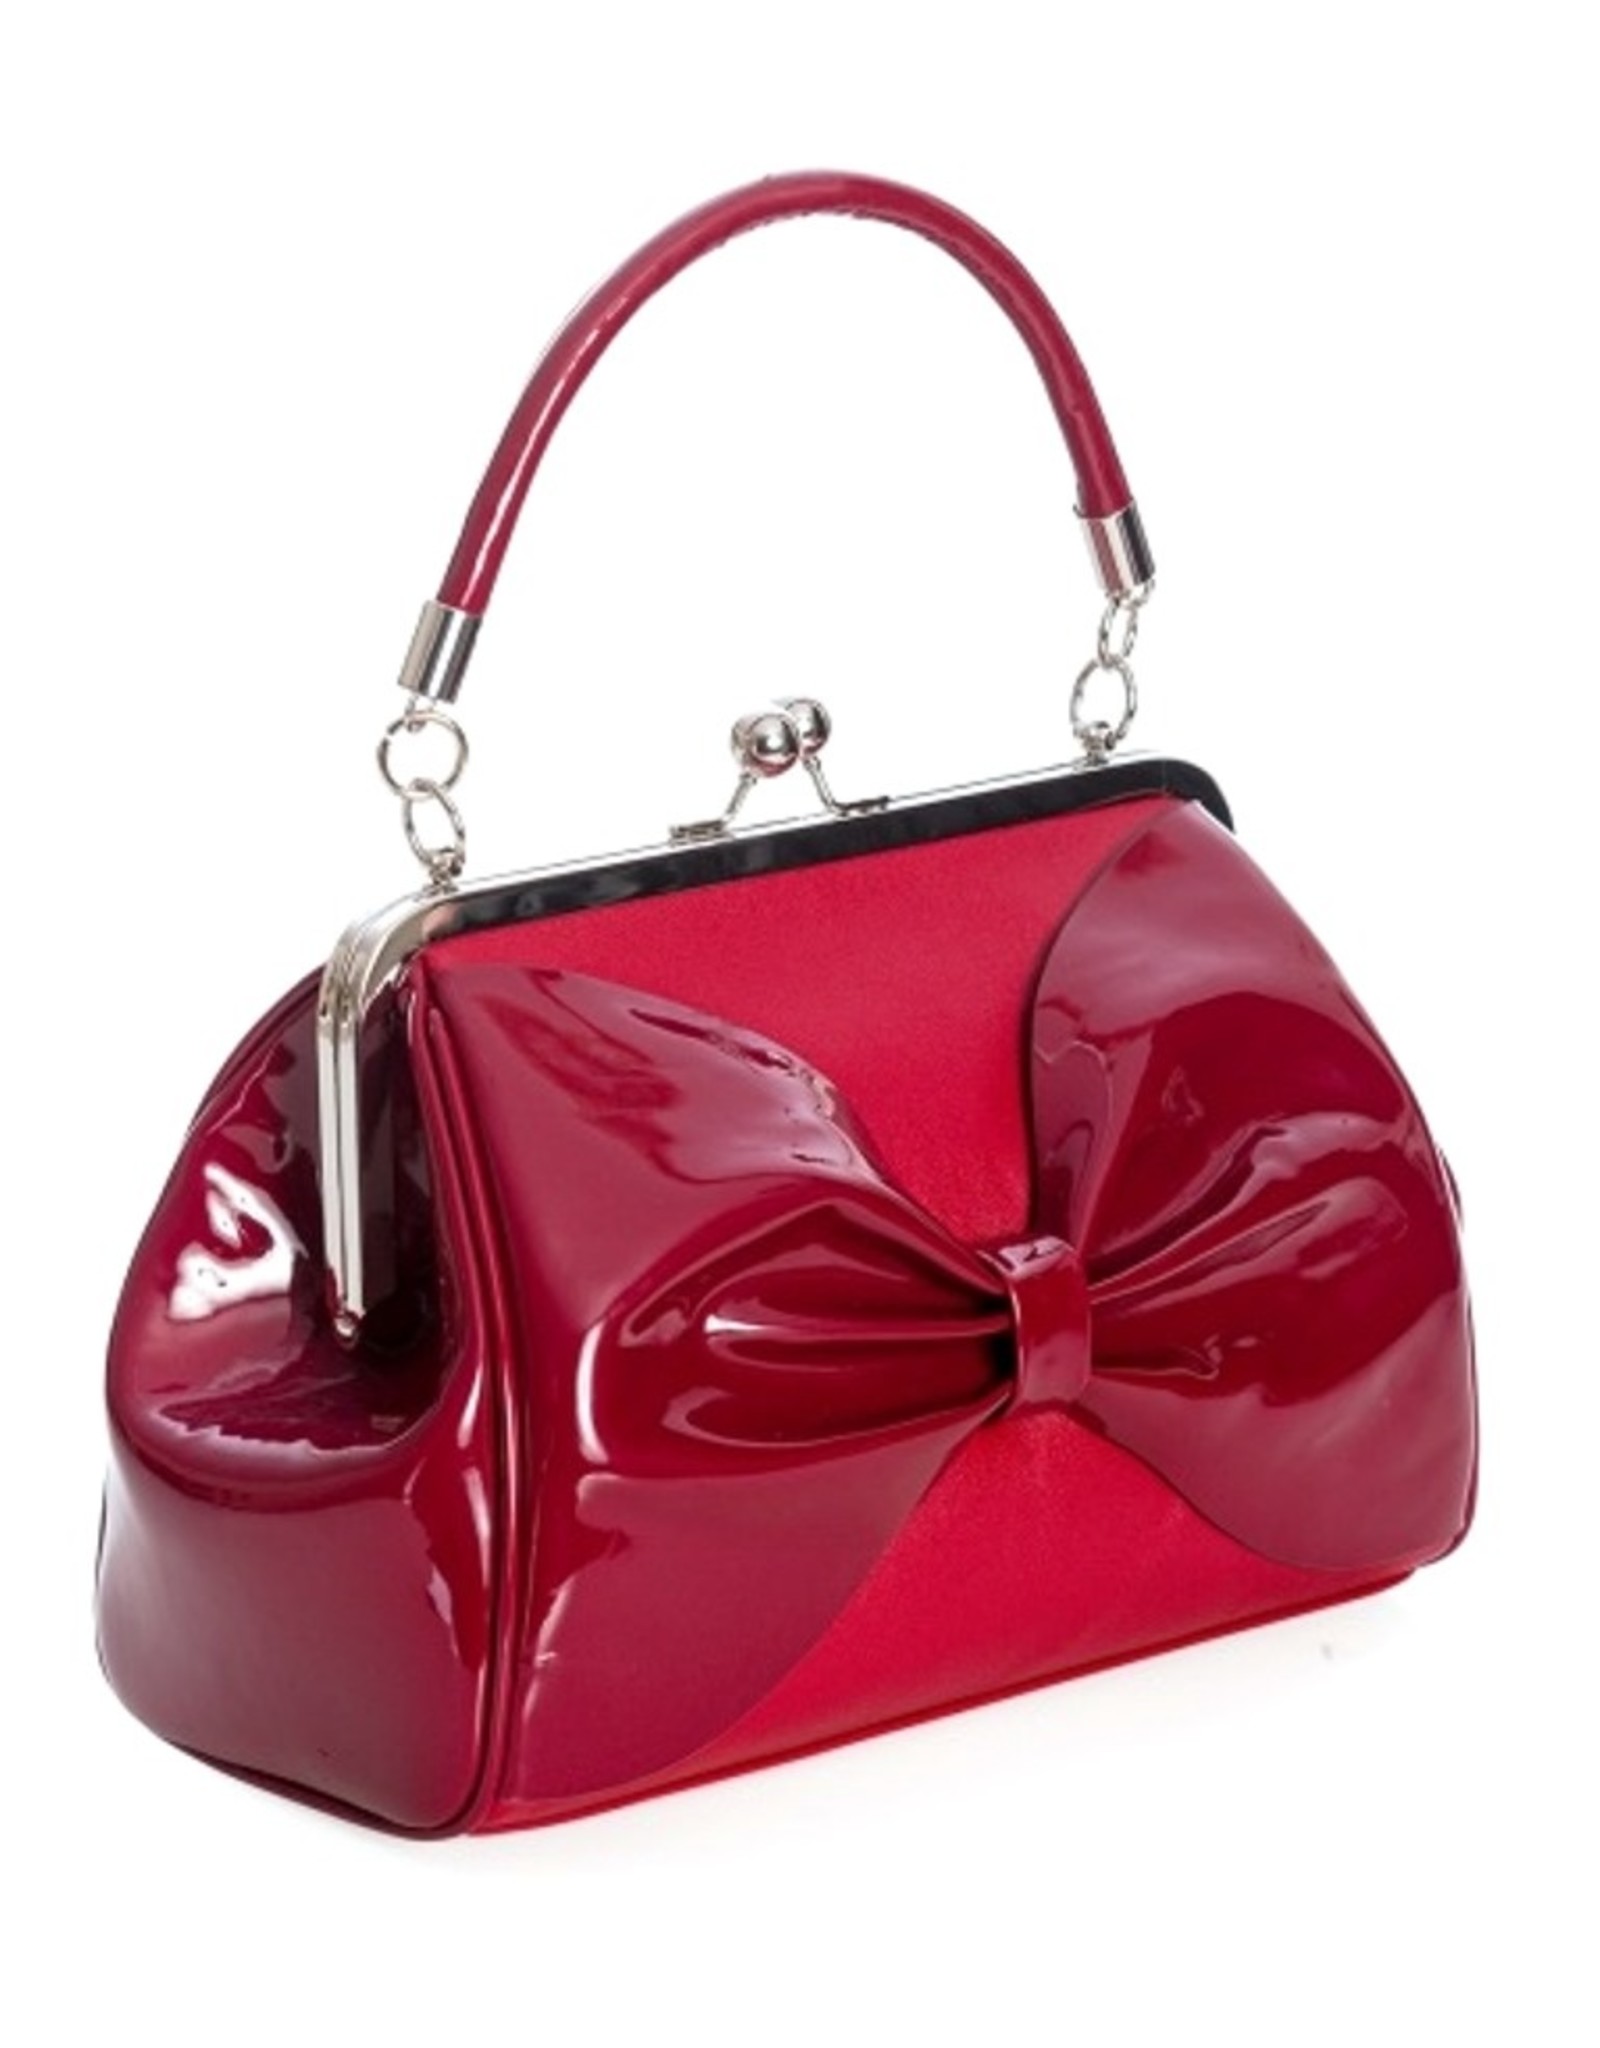 Banned Retro bags  Vintage bags - 1950's Retro Hollywood Glam Clasp Handbag  (Red)